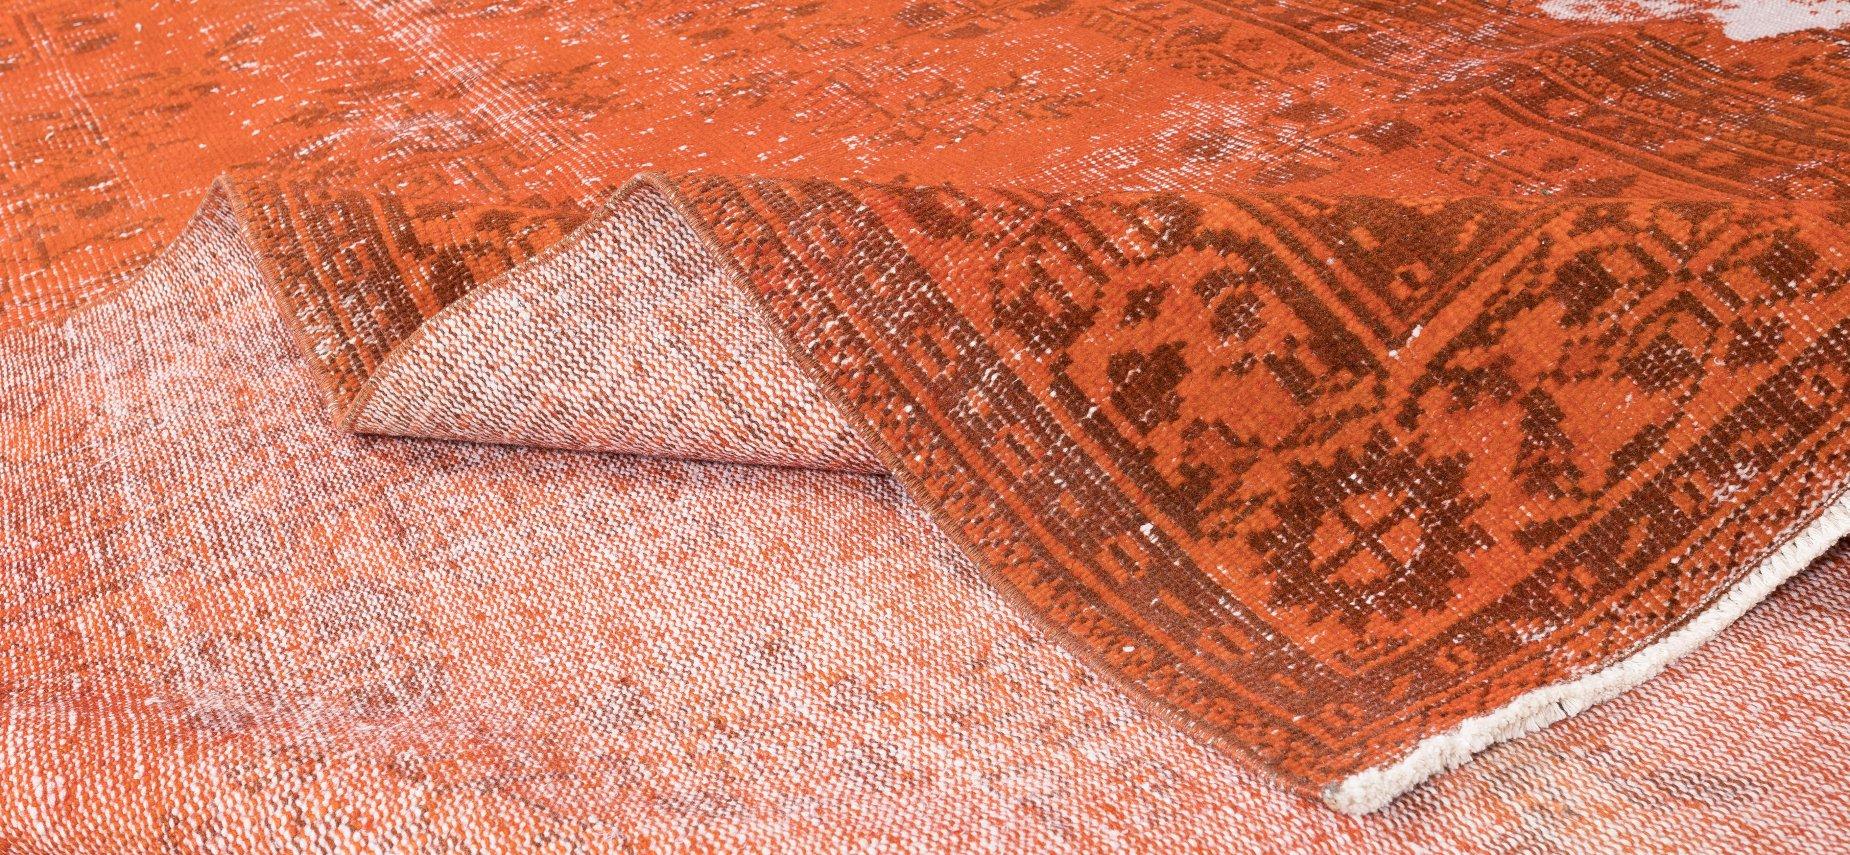 Hand-Knotted 6.2x9.8 Ft Orange Vintage Handmade Turkish Wool Rug, Distressed Modern Carpet For Sale